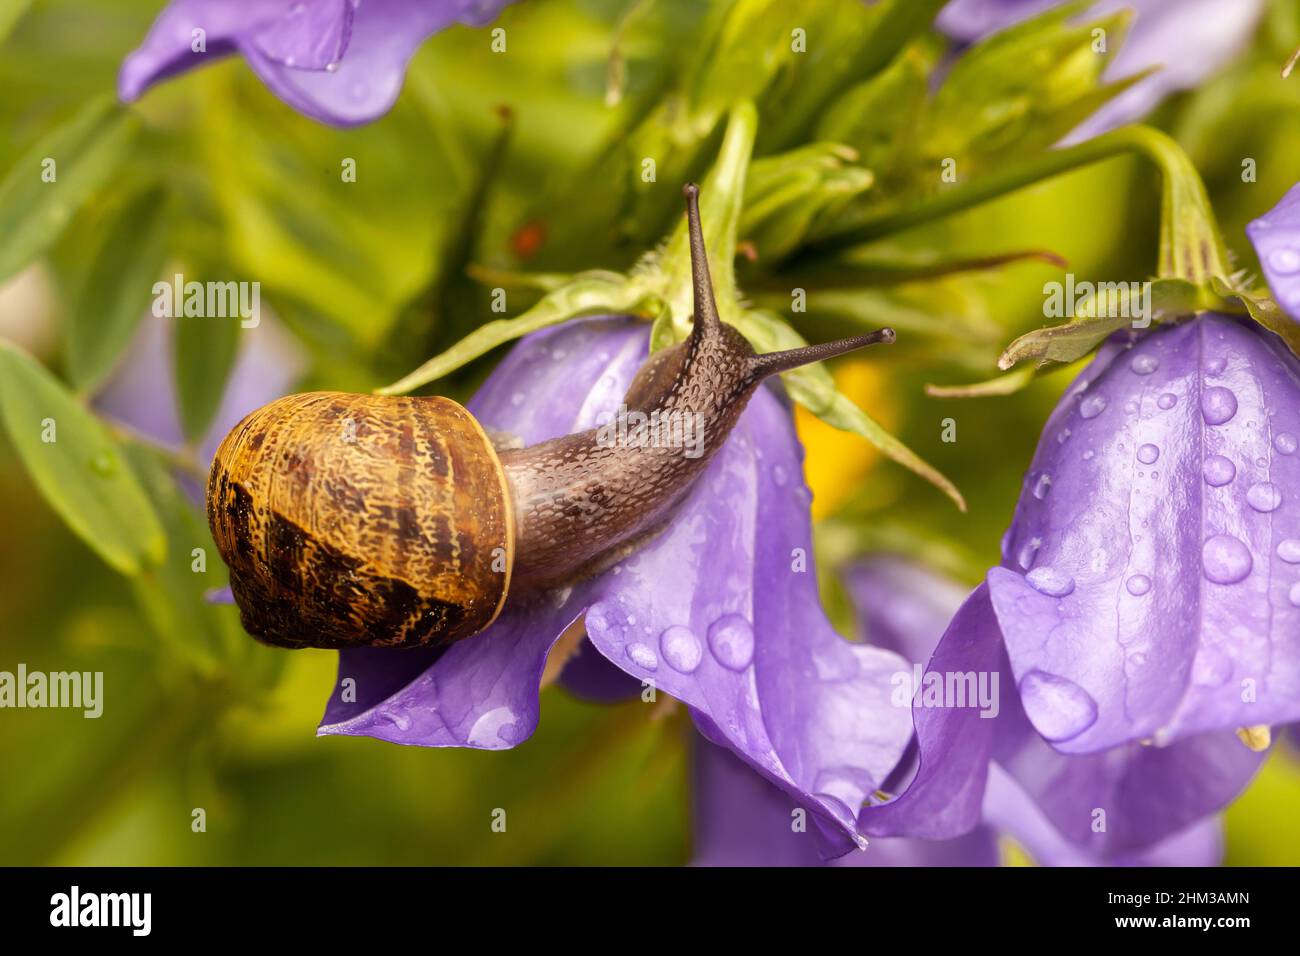 Garden snail on purple Campanula flower petal. Close up macro of gastropod and beautiful flower Stock Photo